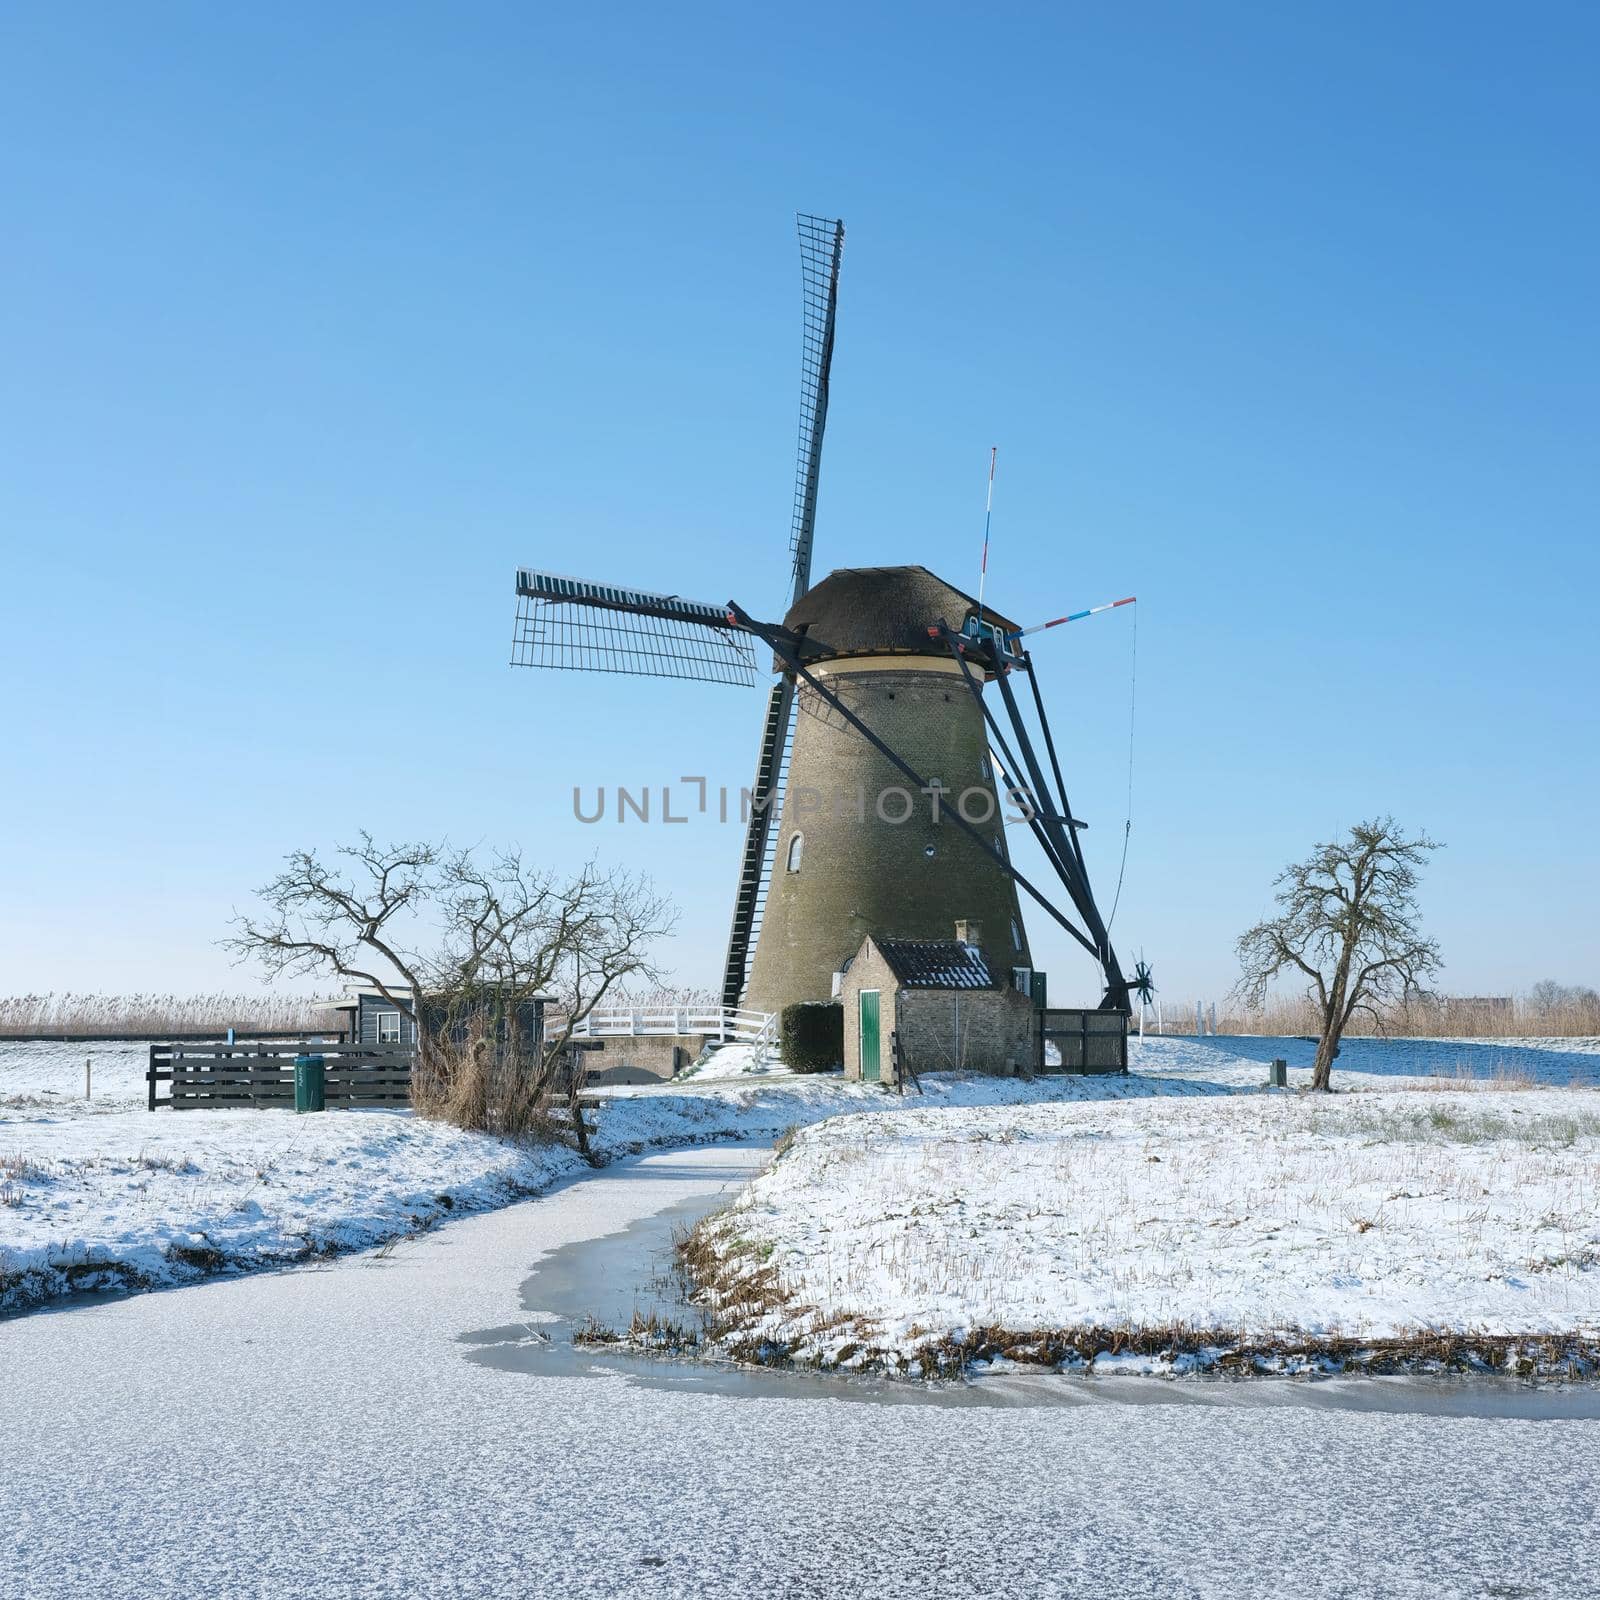 windmill in snow landscape of kinderdijk in holland under blue sky by ahavelaar